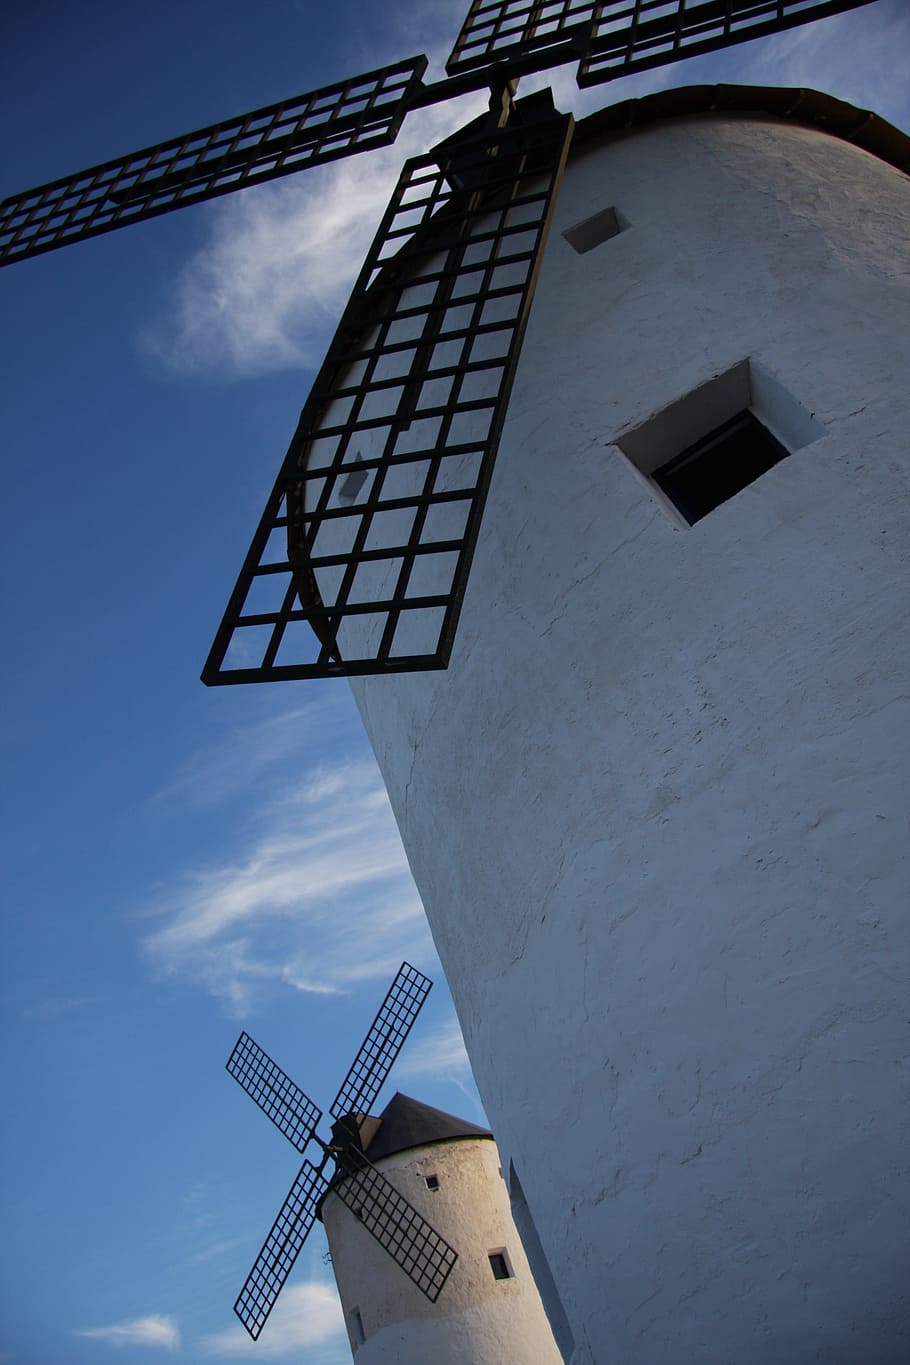 Mills, Windmill, Don Quixote, Stain, windmills, mill, architecture, sky, blue, europe